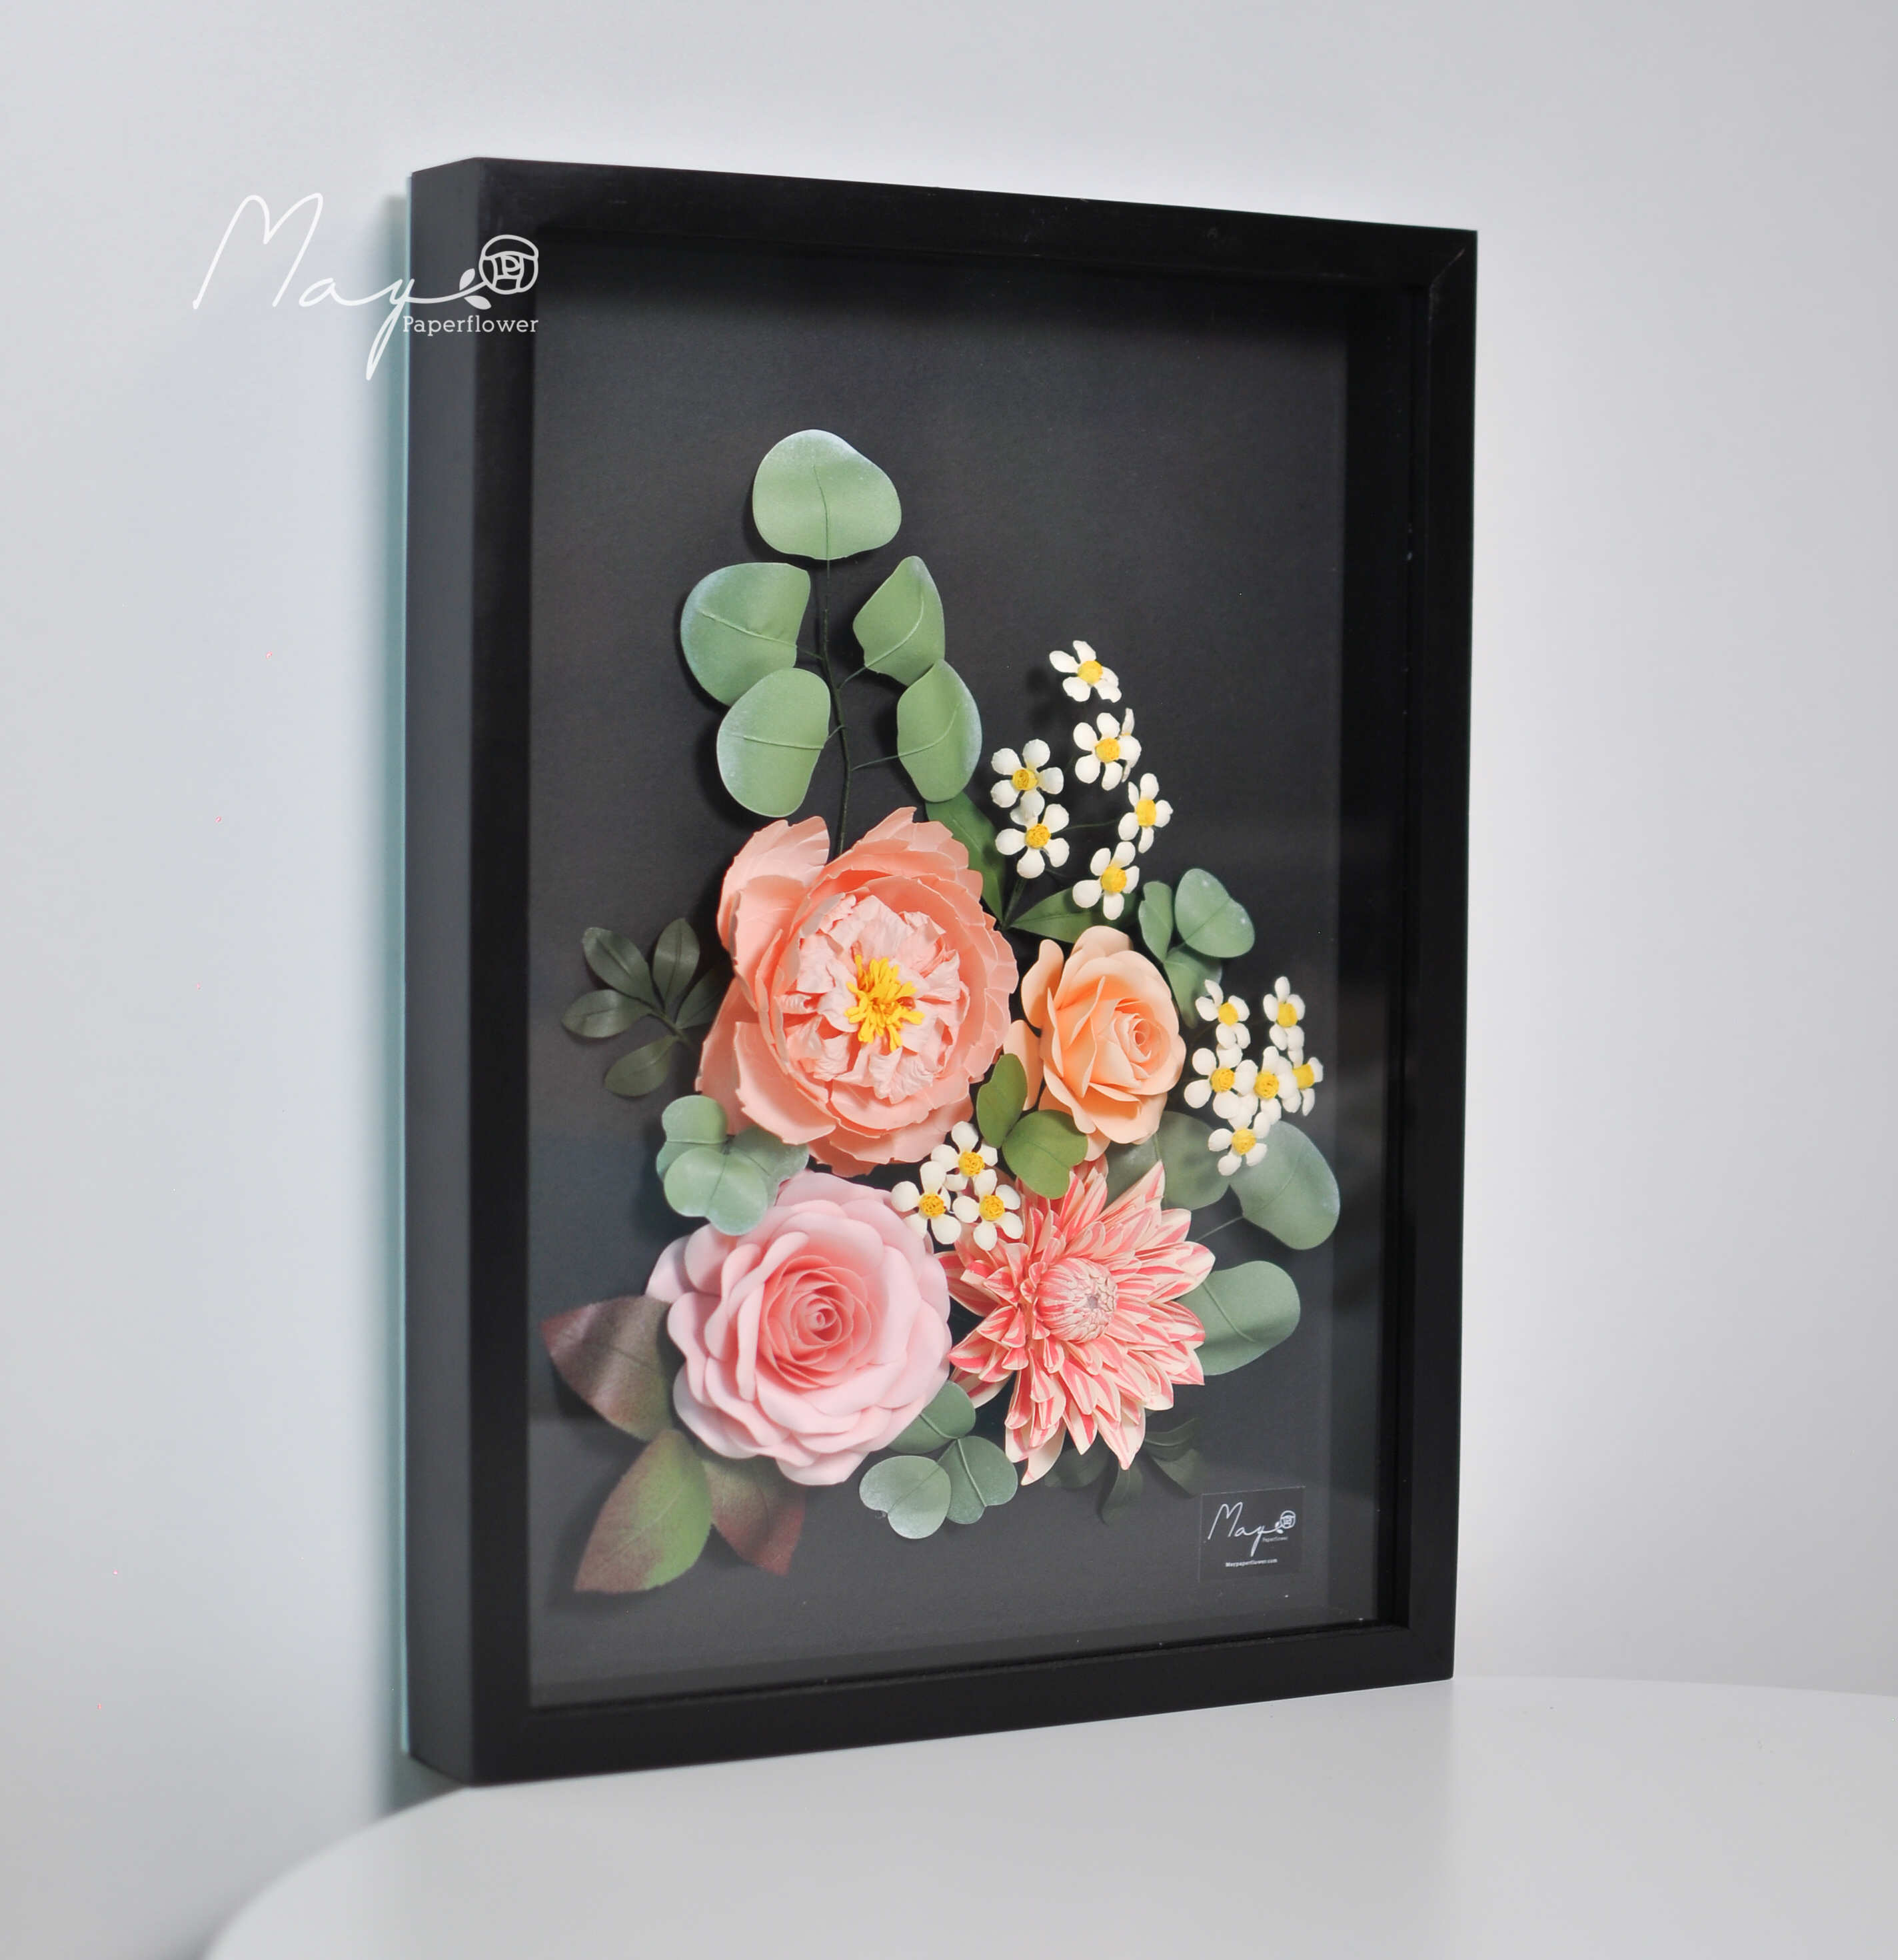 Tranh hoa giấy handmade trang trí cao cấp  SNAPSHOT Secret Garden 30x40cm - Maypaperflower Hoa giấy nghệ thuật